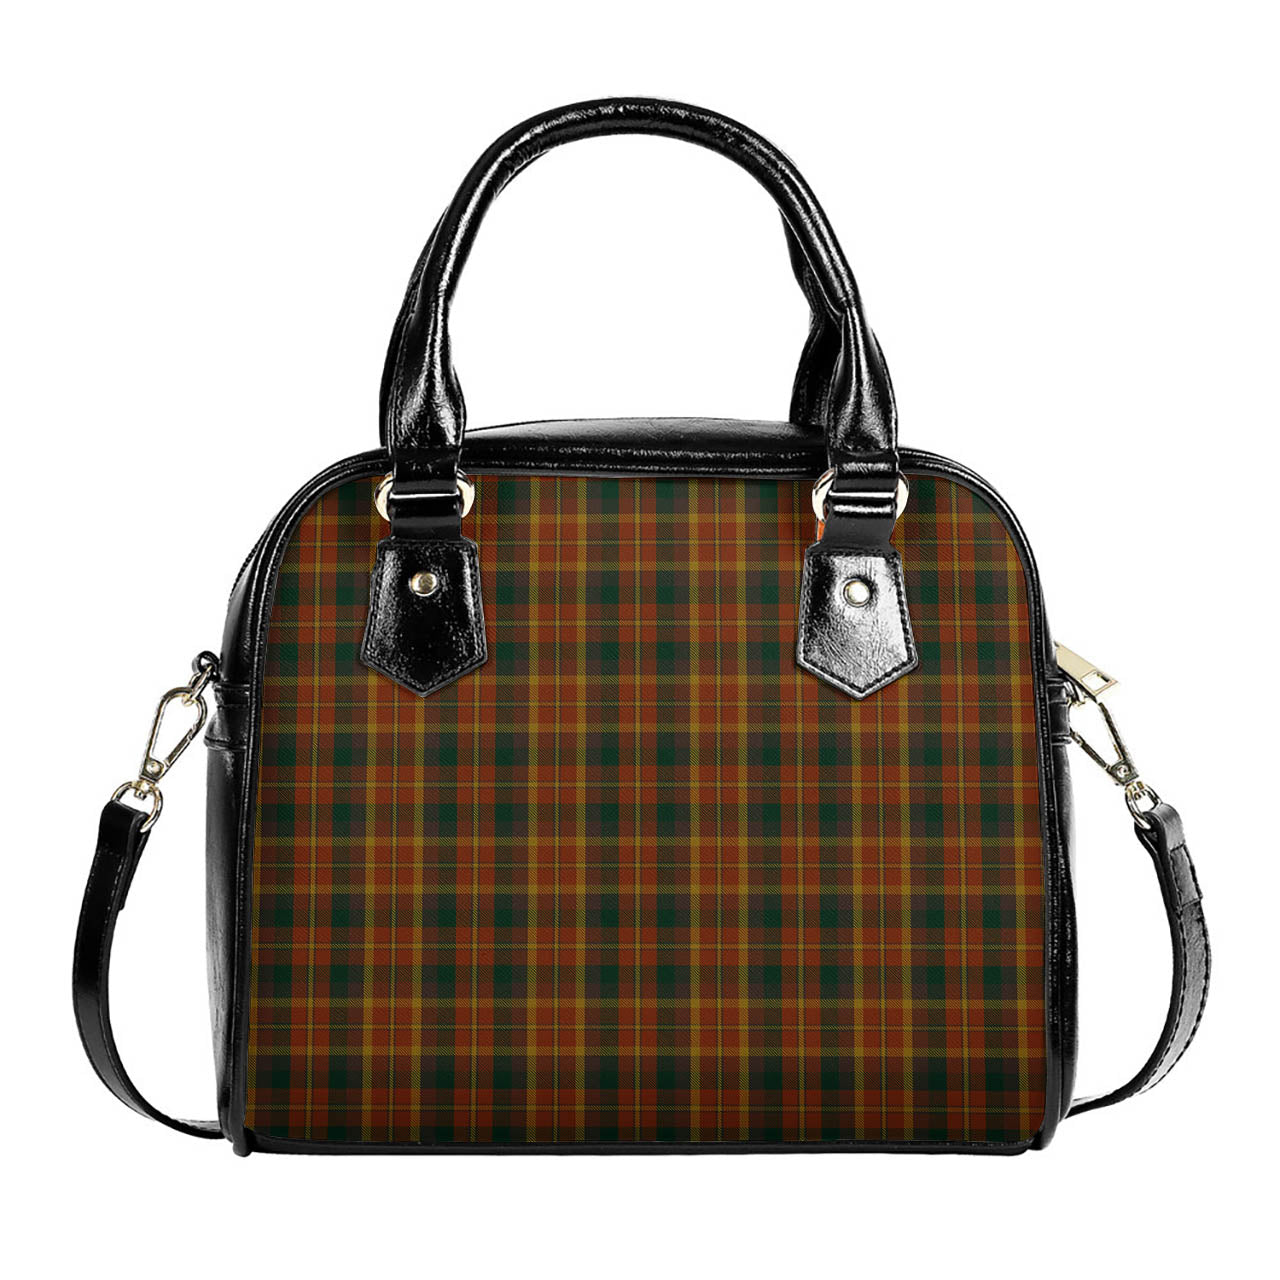 Monaghan County Ireland Tartan Shoulder Handbags One Size 6*25*22 cm - Tartanvibesclothing